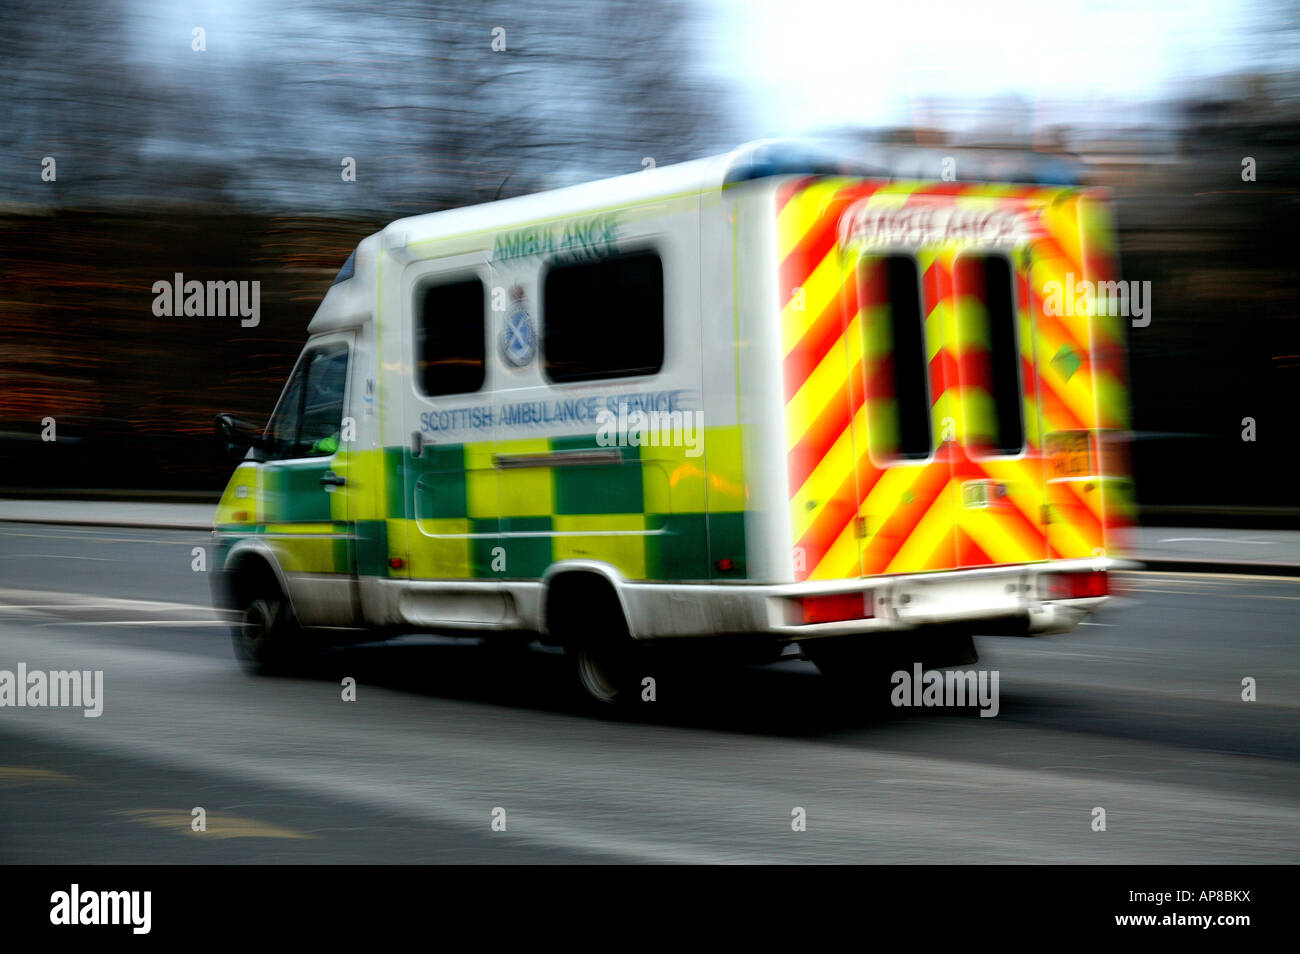 Speeding Ambulance with blurred movement, on way to an emergency, Edinburgh, Princes Street, Scotland, UK Stock Photo